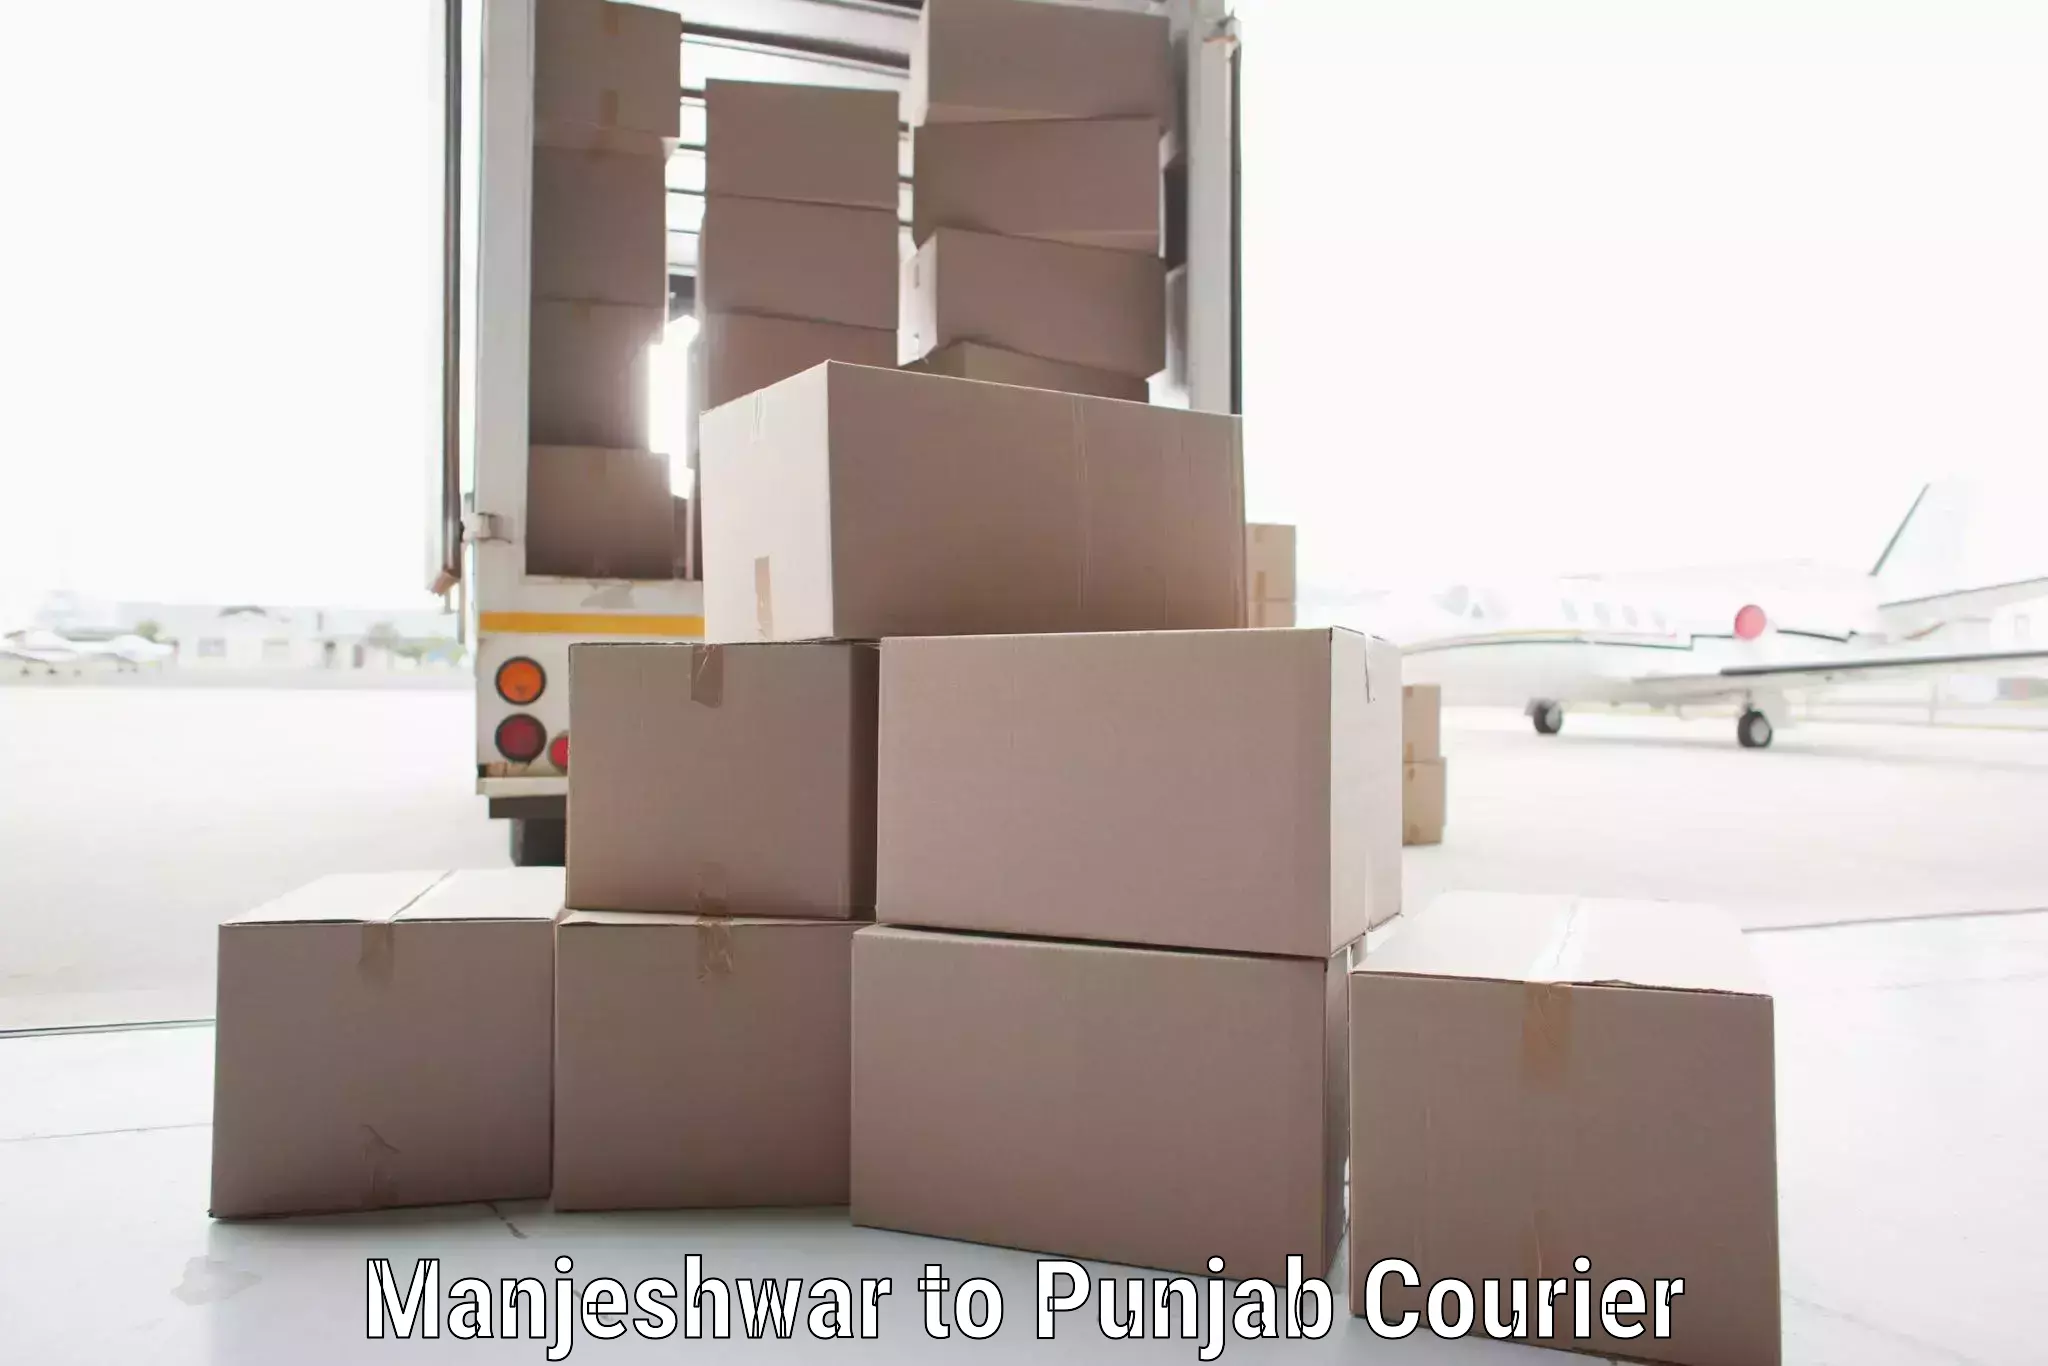 Same-day delivery options Manjeshwar to Punjab